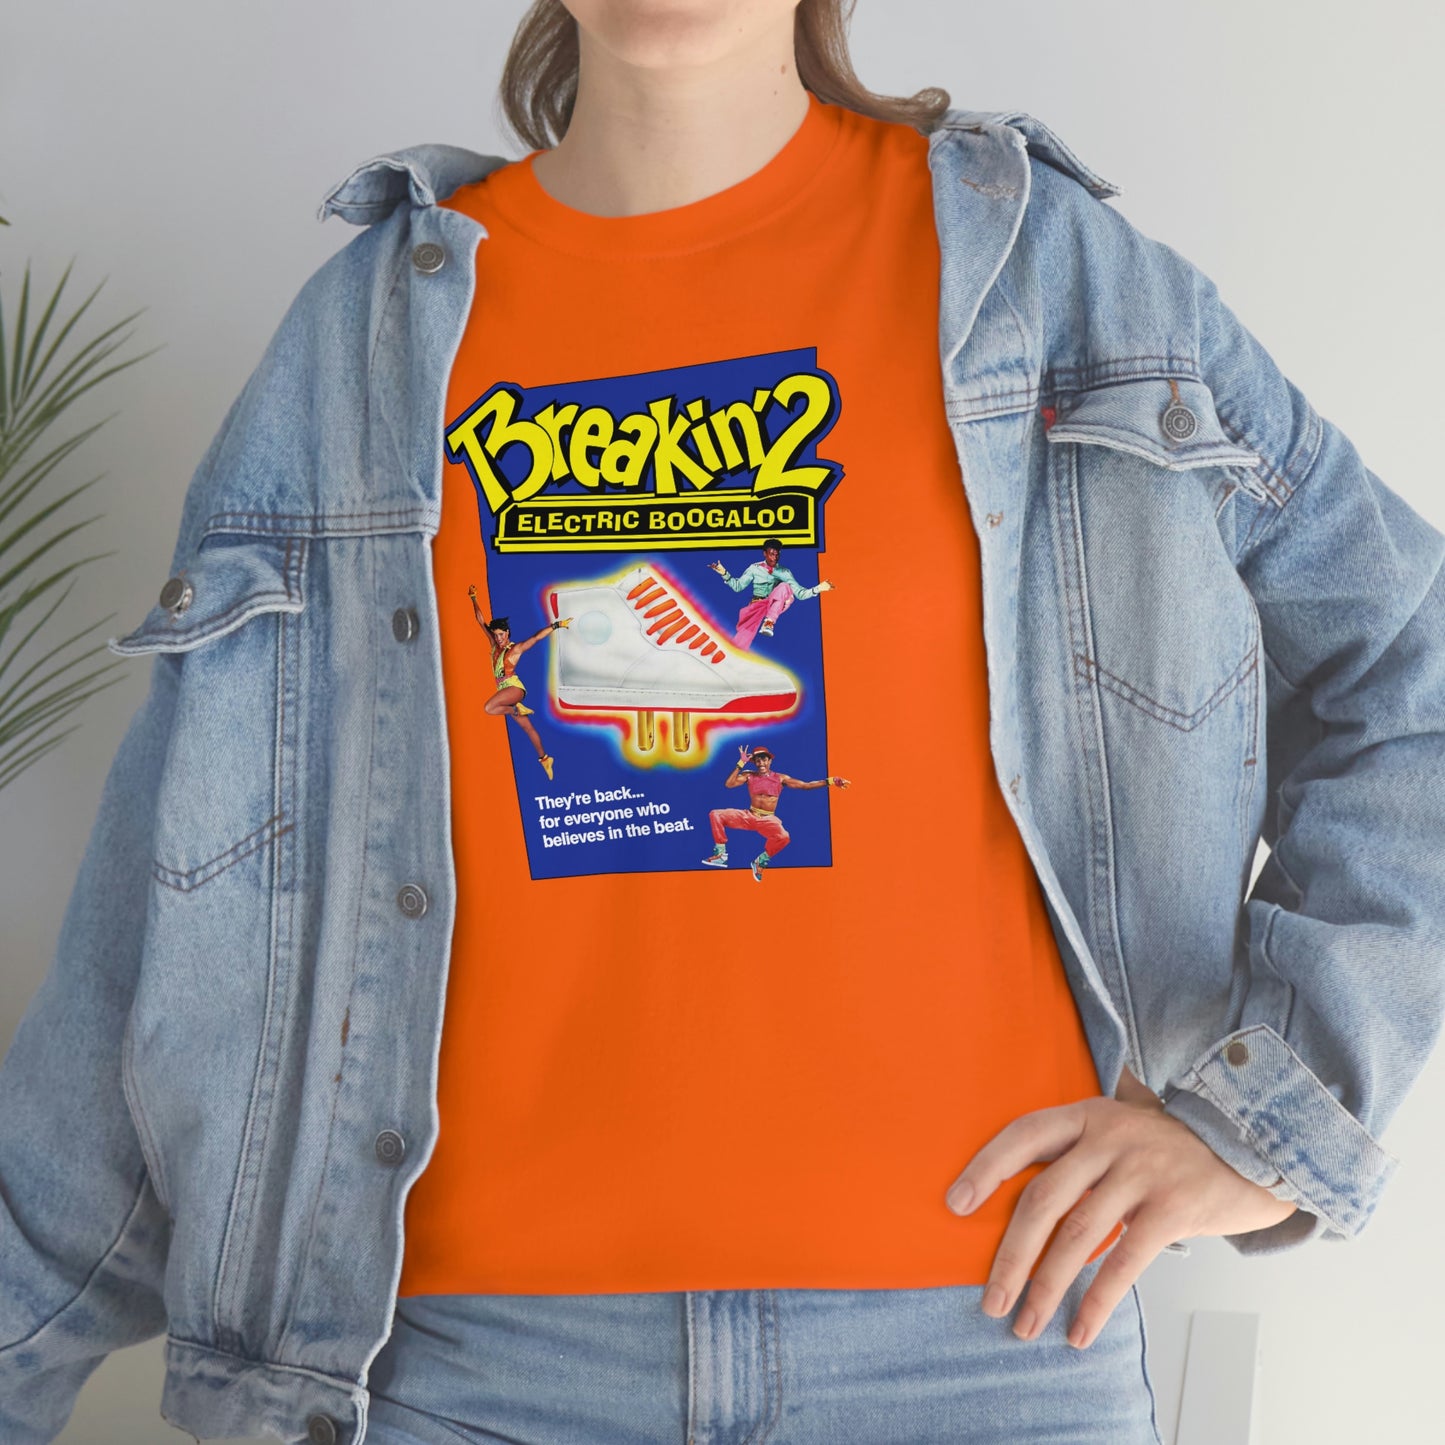 Breakin' 2 Electric Boogaloo T-Shirt